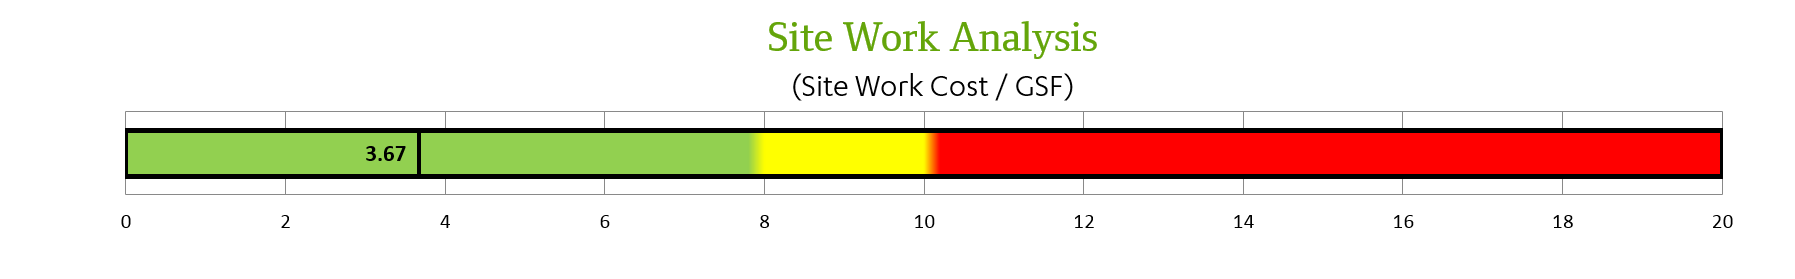 Site work analysis